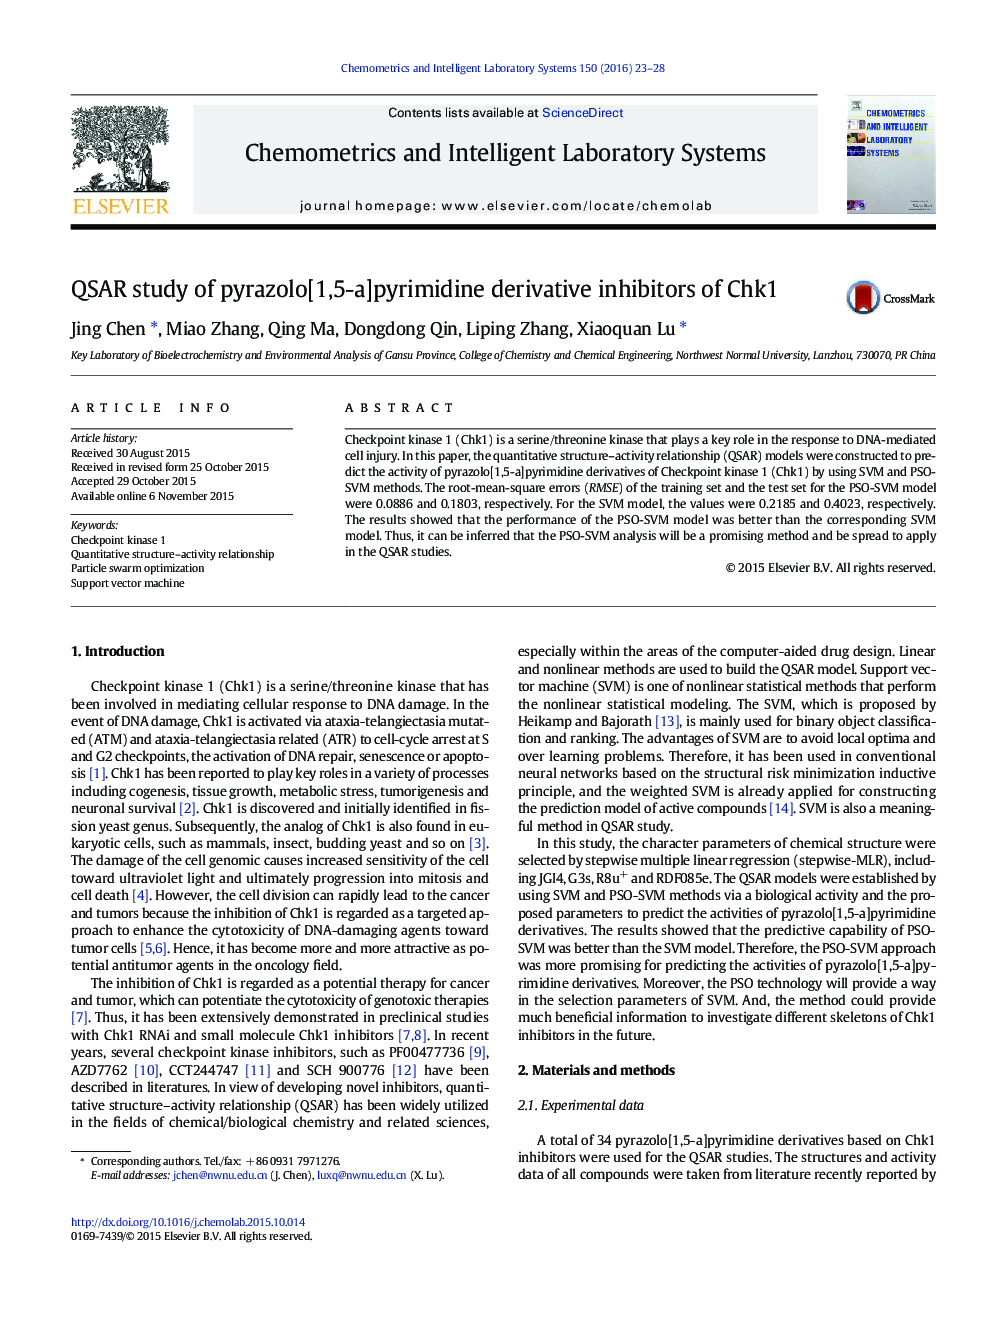 QSAR study of pyrazolo[1,5-a]pyrimidine derivative inhibitors of Chk1